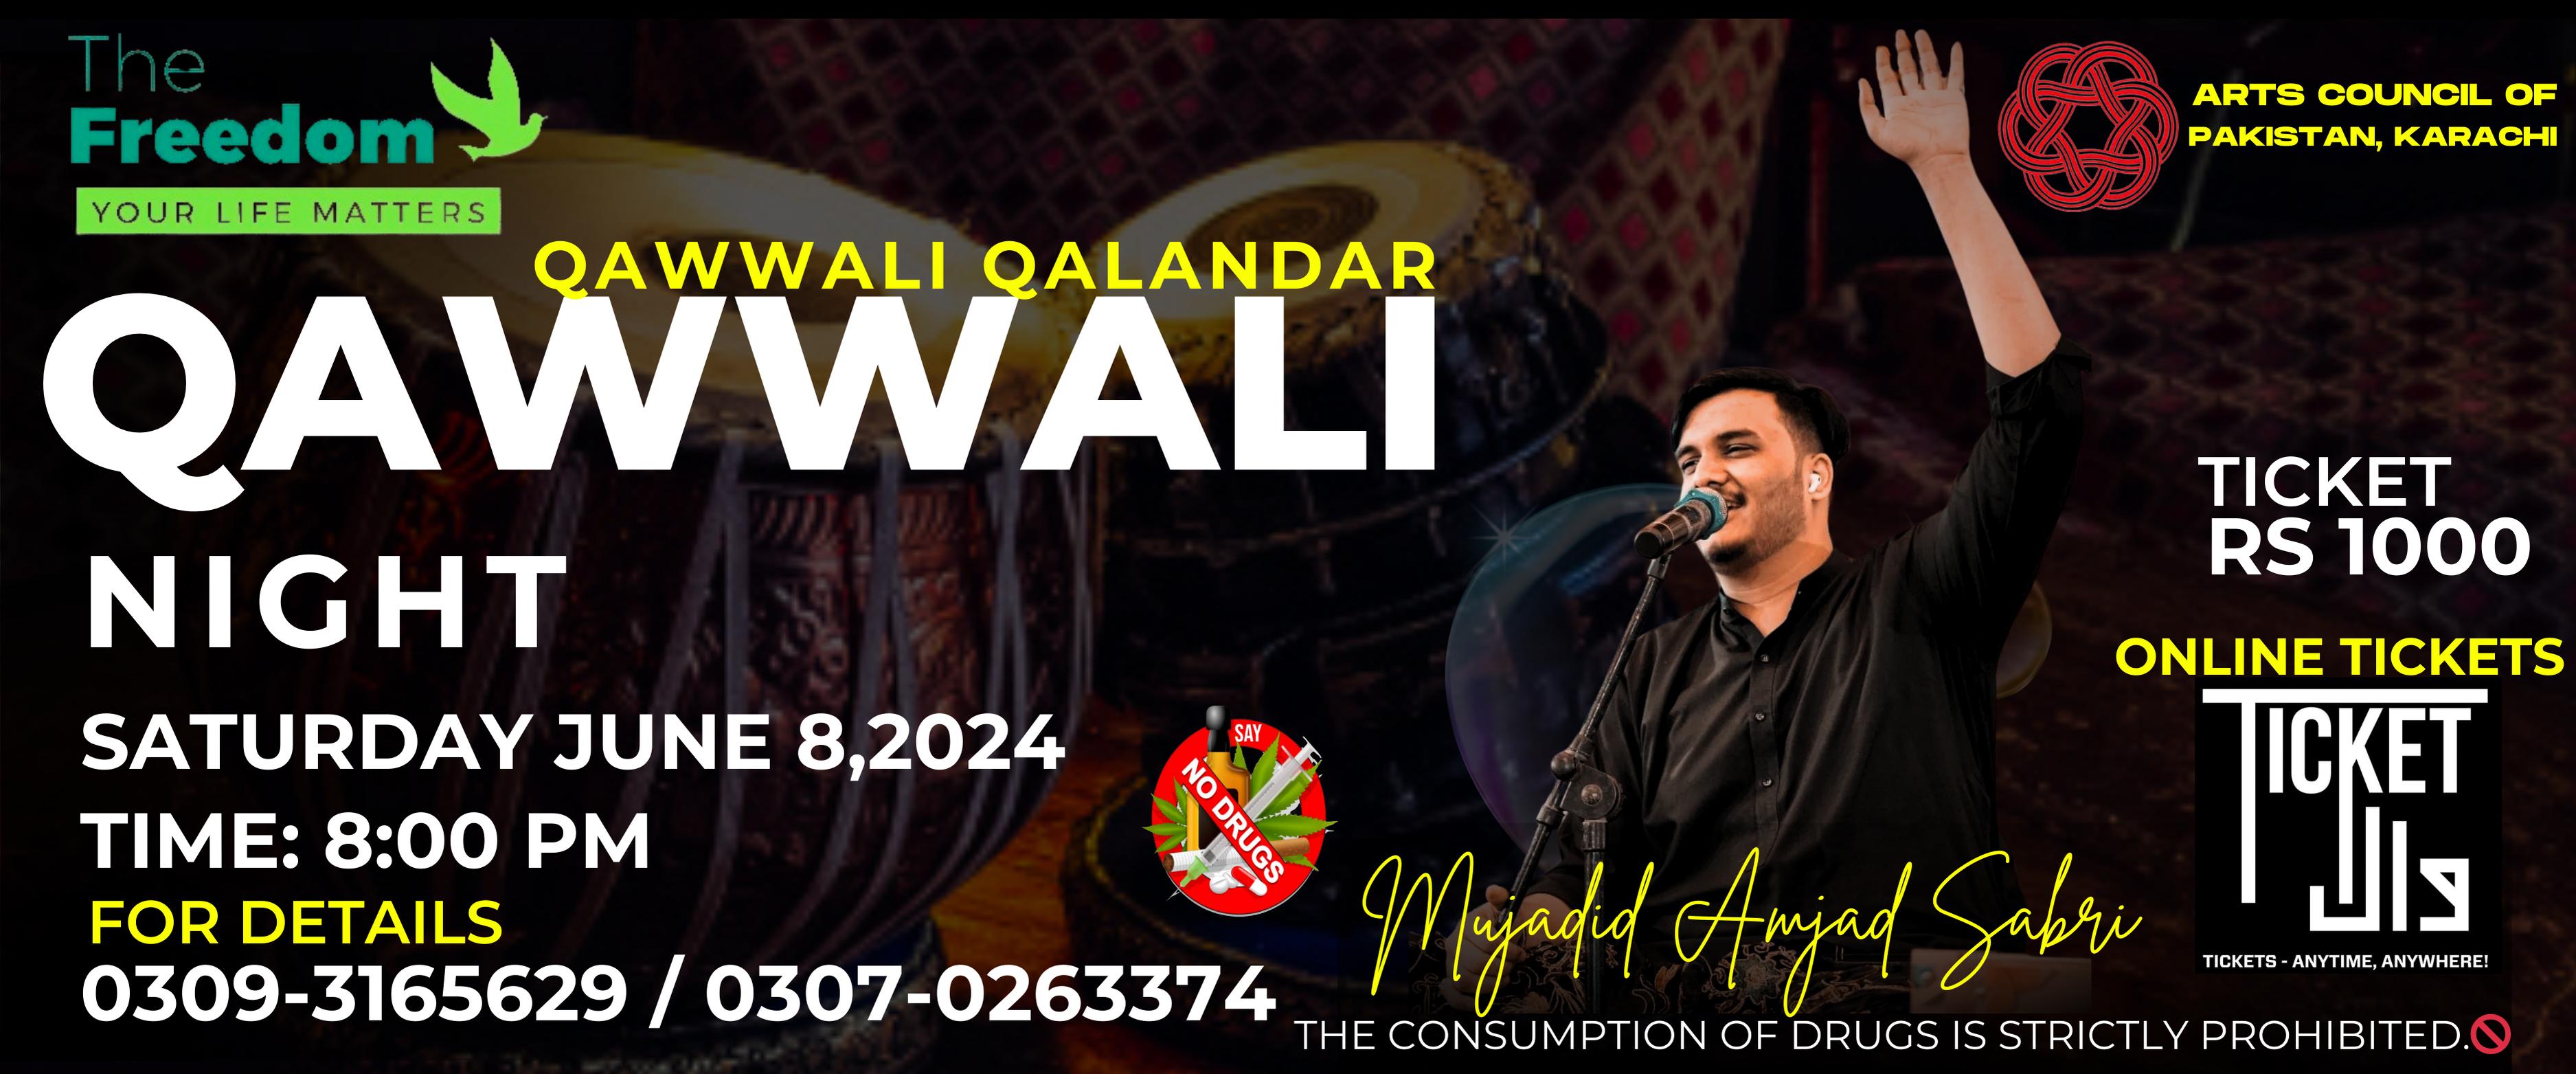 Qawwali Qalandar (Mujaddad Amjad Sabri)